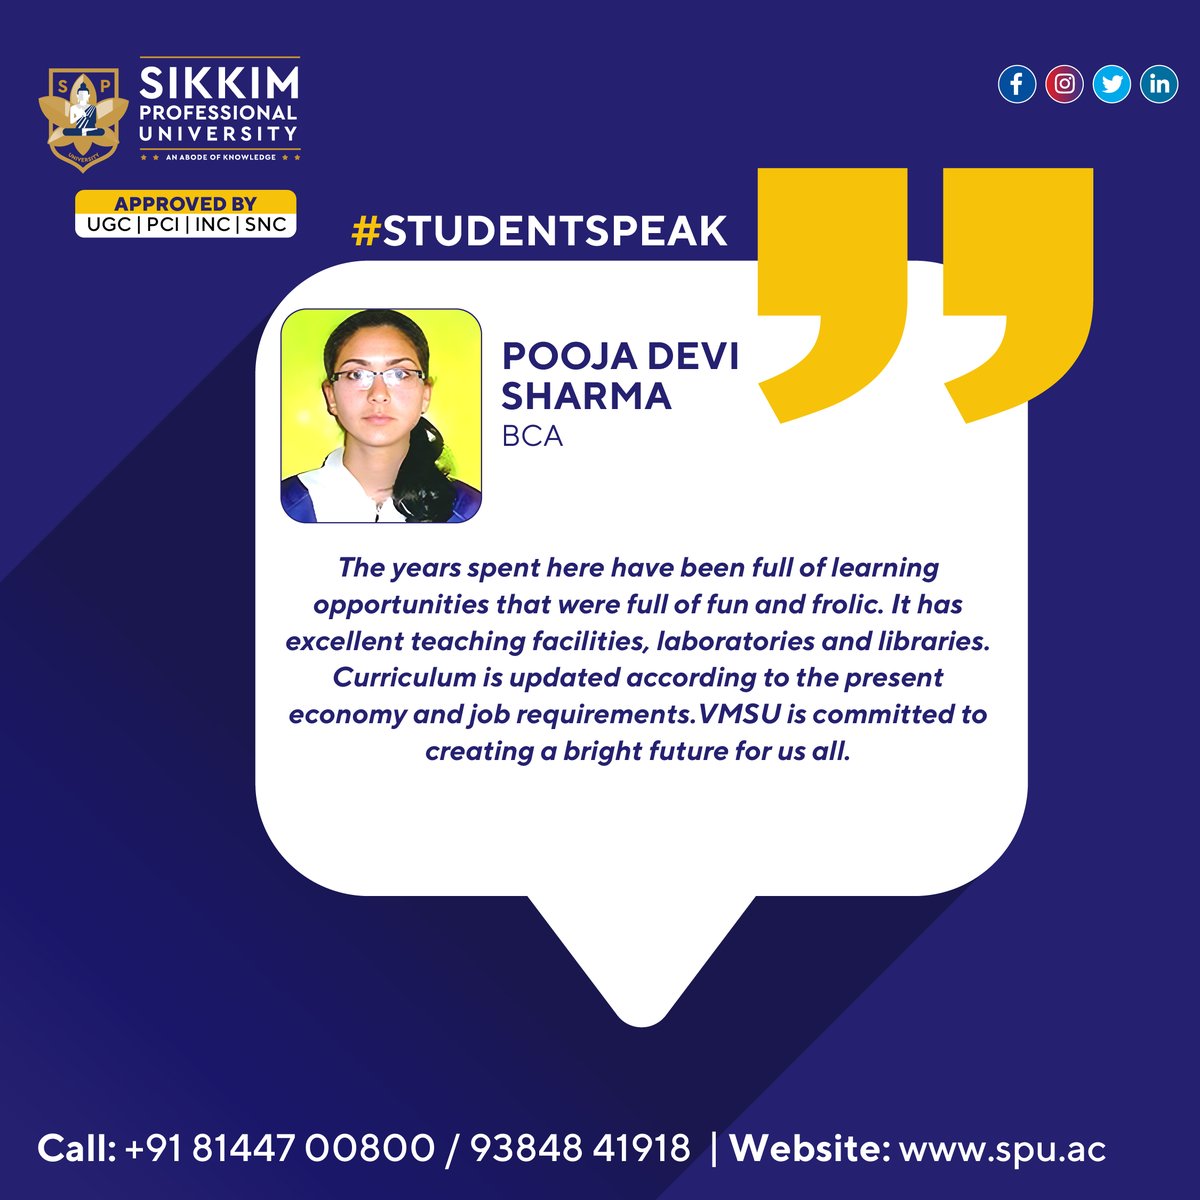 #SikkimProfessionalUniversity #sikkim #university #leadinguniversity #studenttestimonial #successstory #studentplacement #testimonial